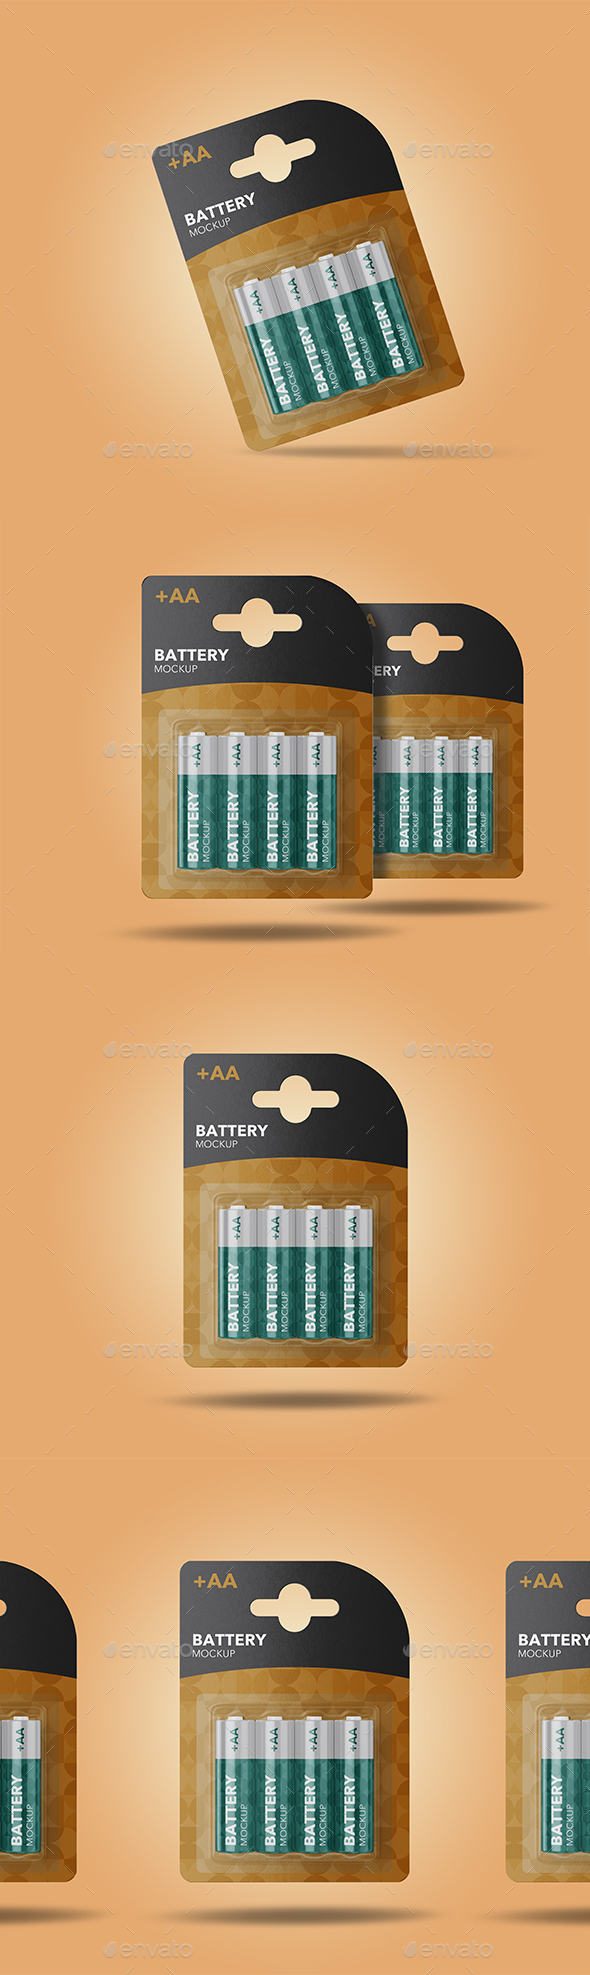 Battery Packaging Mockup